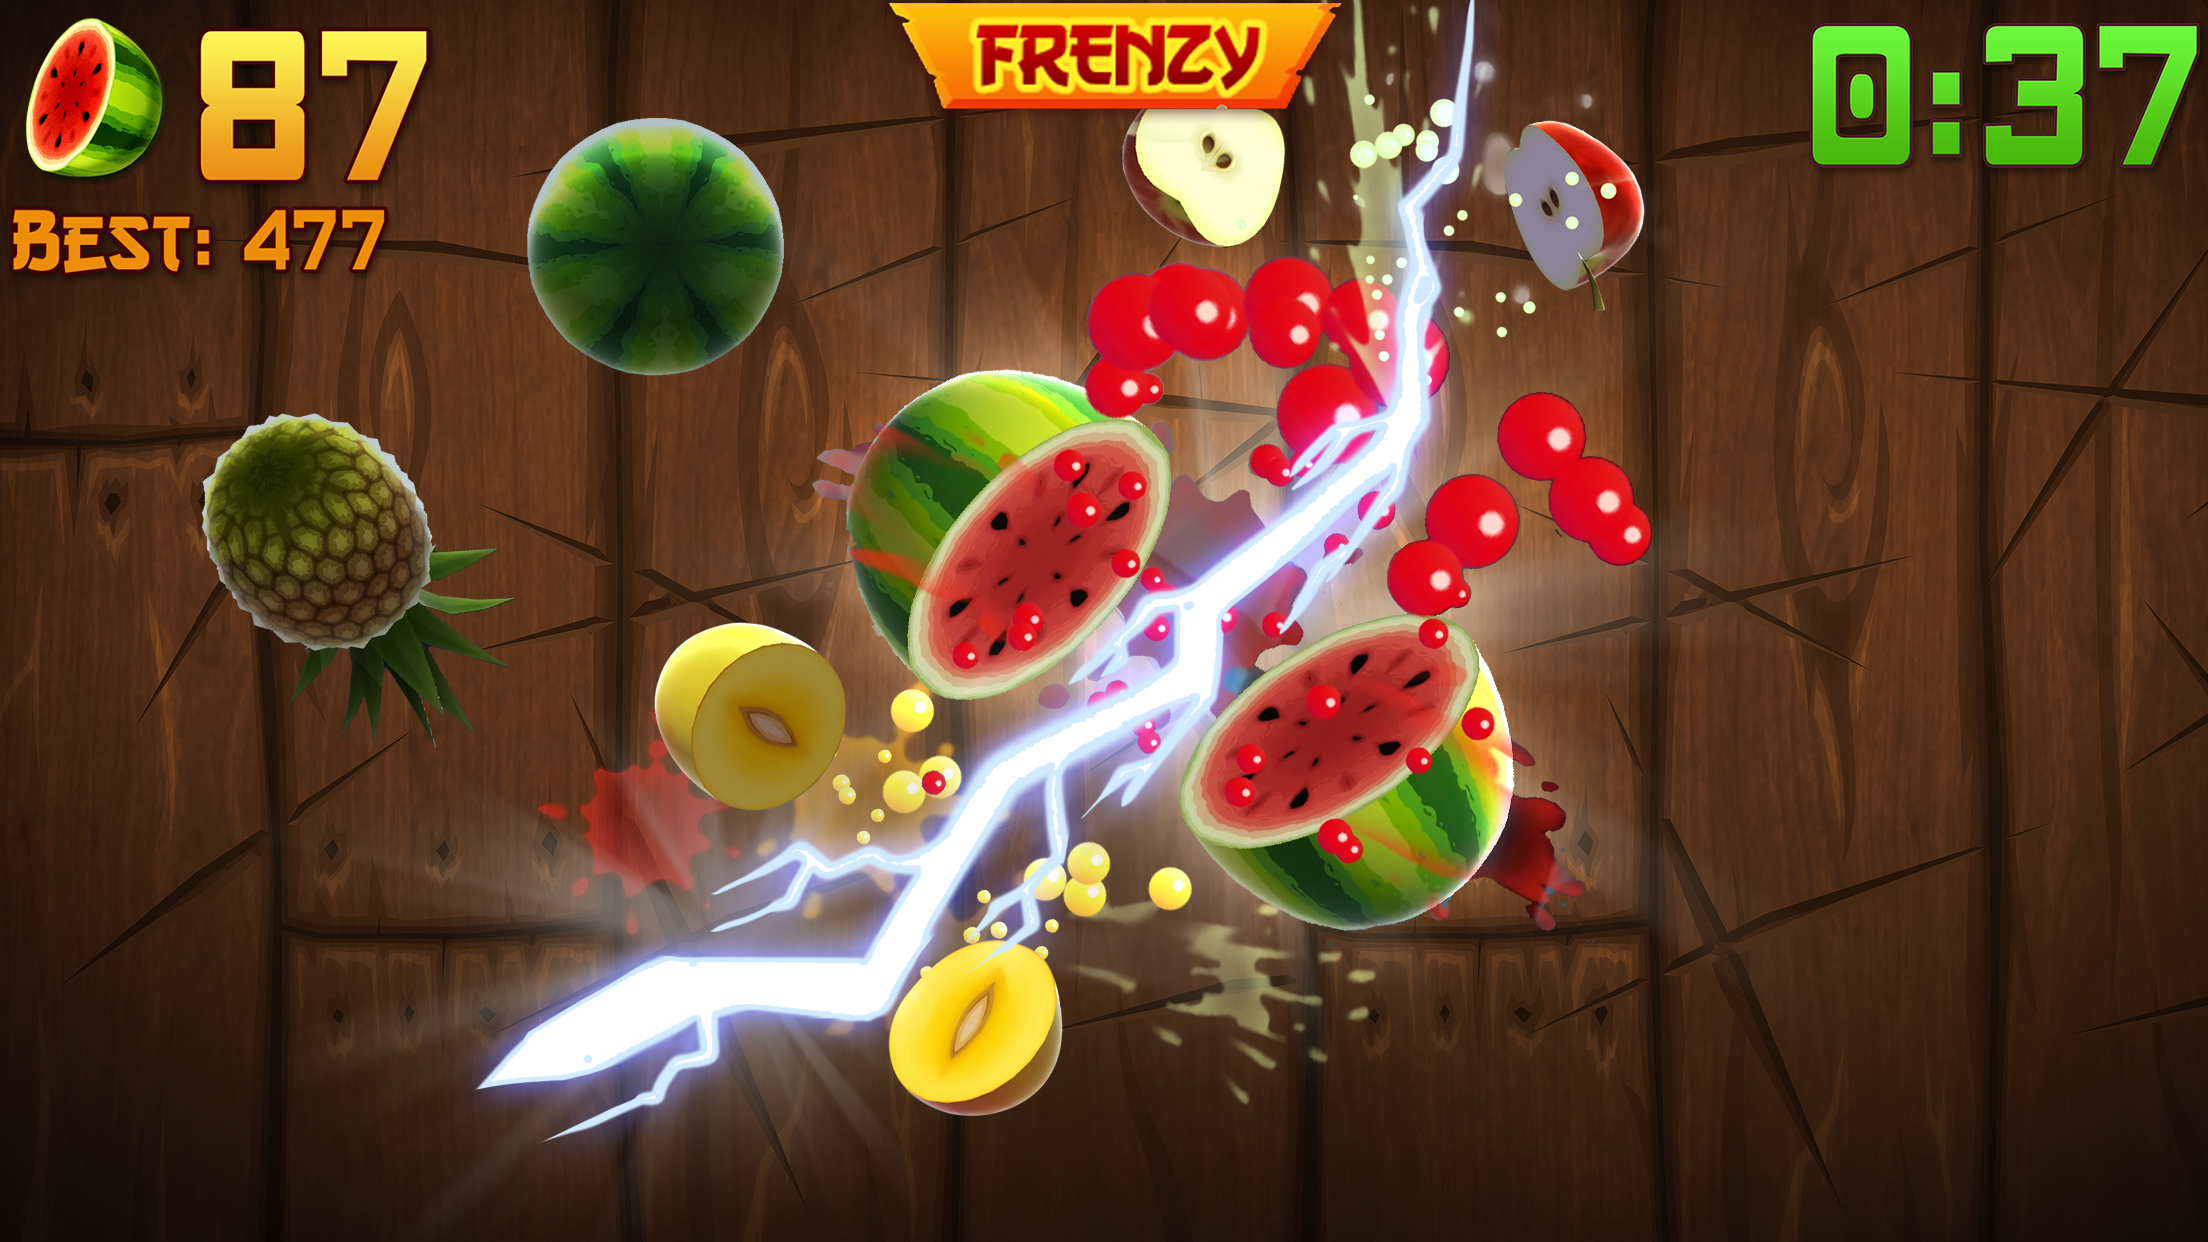 Play Fruit Ninja® Online for Free on PC & Mobile